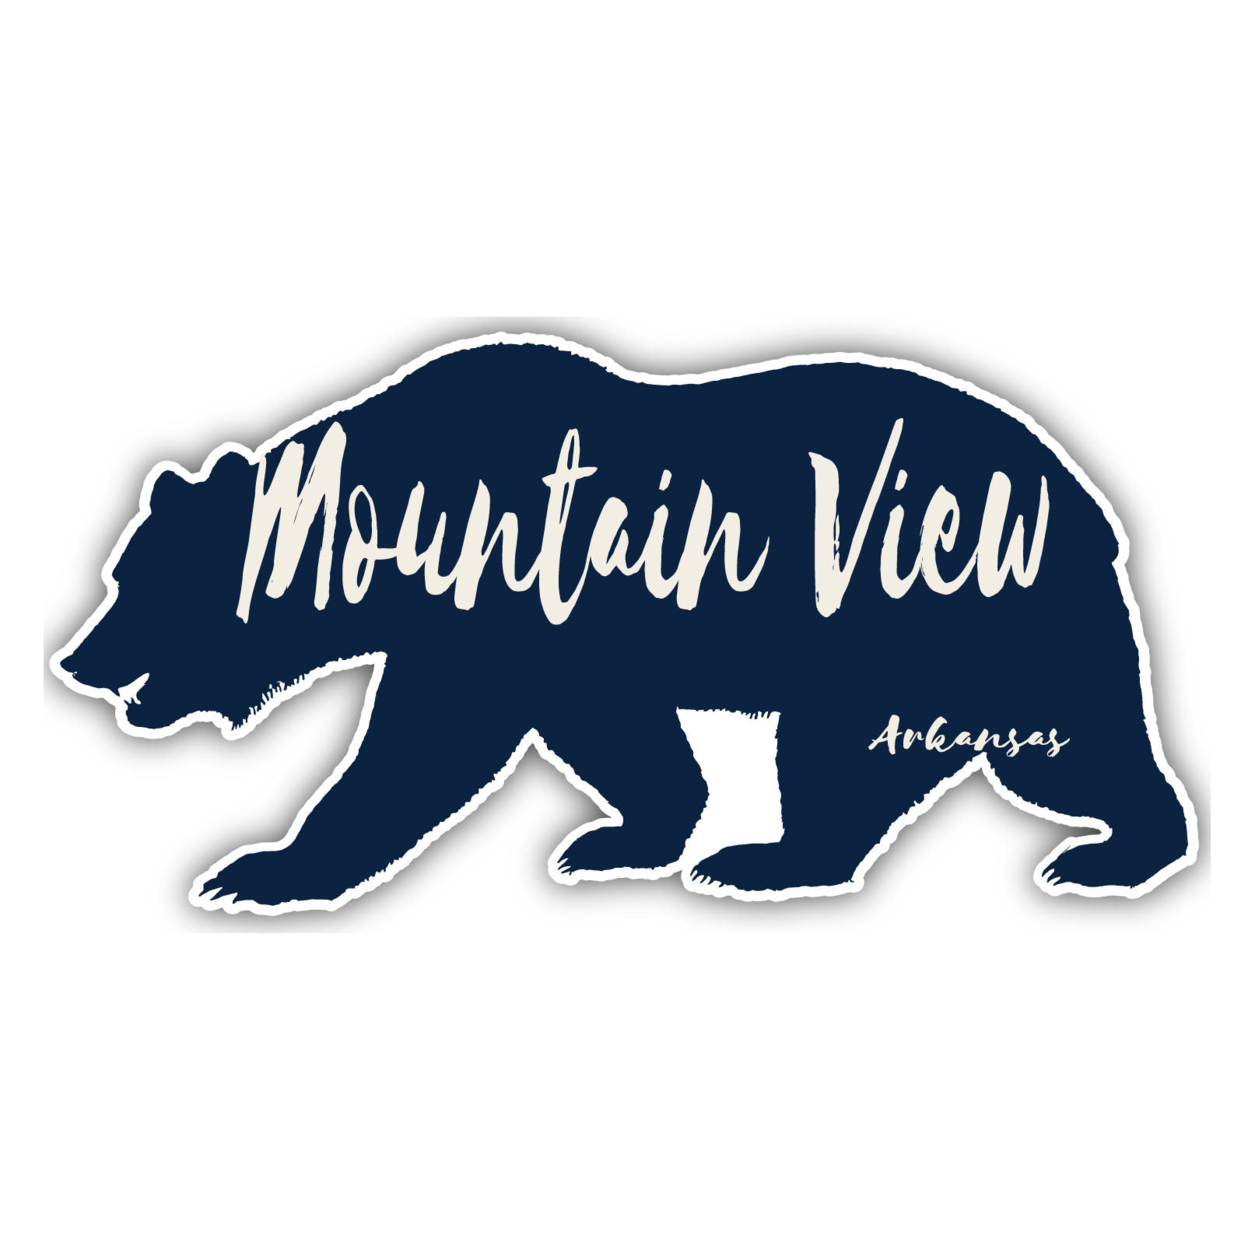 Mountain View Arkansas Souvenir Decorative Stickers (Choose Theme And Size) - Single Unit, 4-Inch, Tent